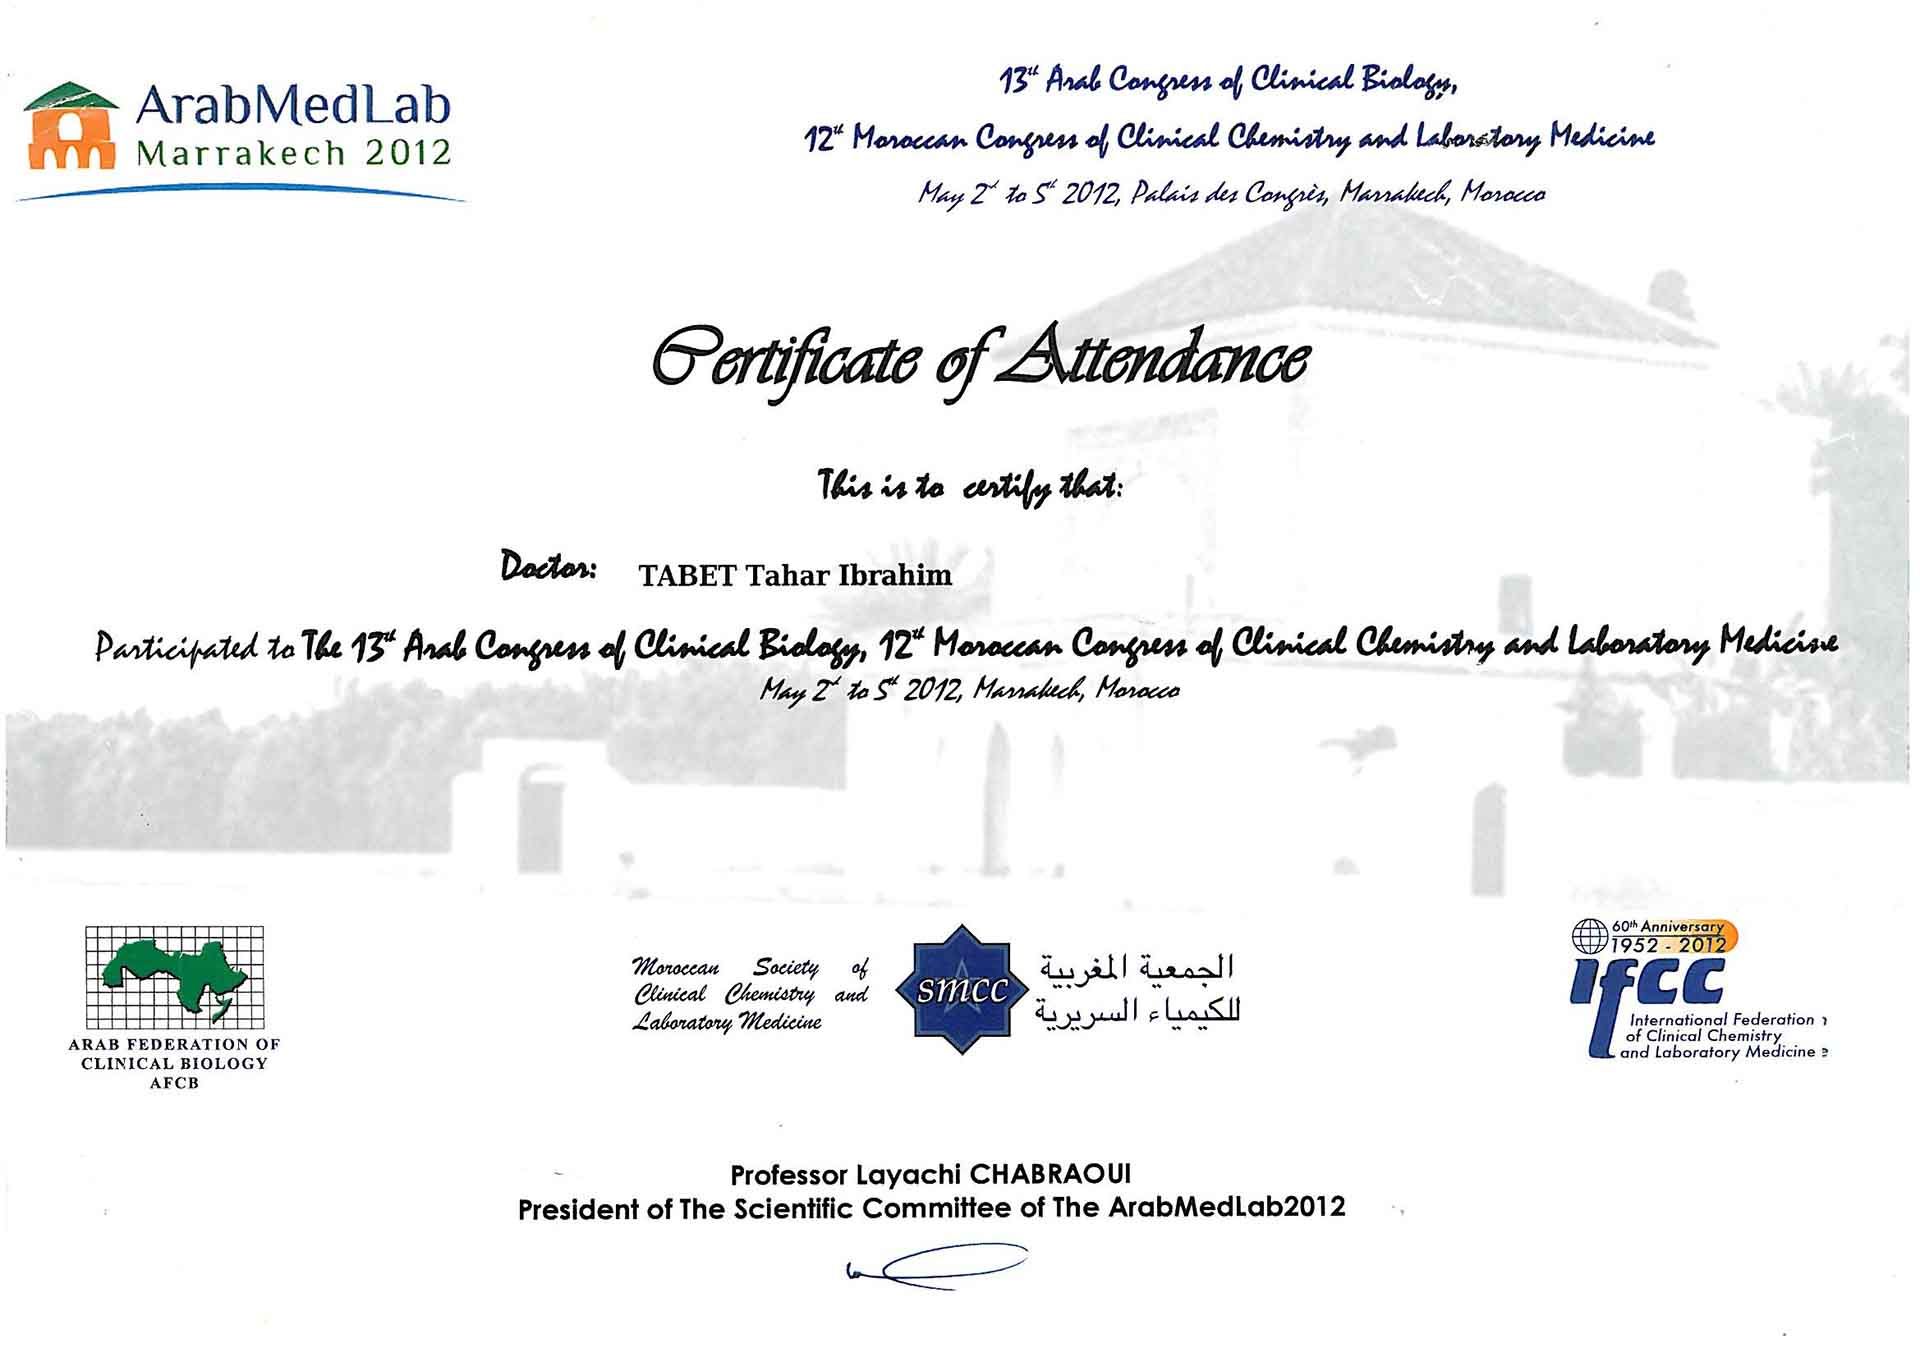 ArabMedLab Certificate d8ee4614